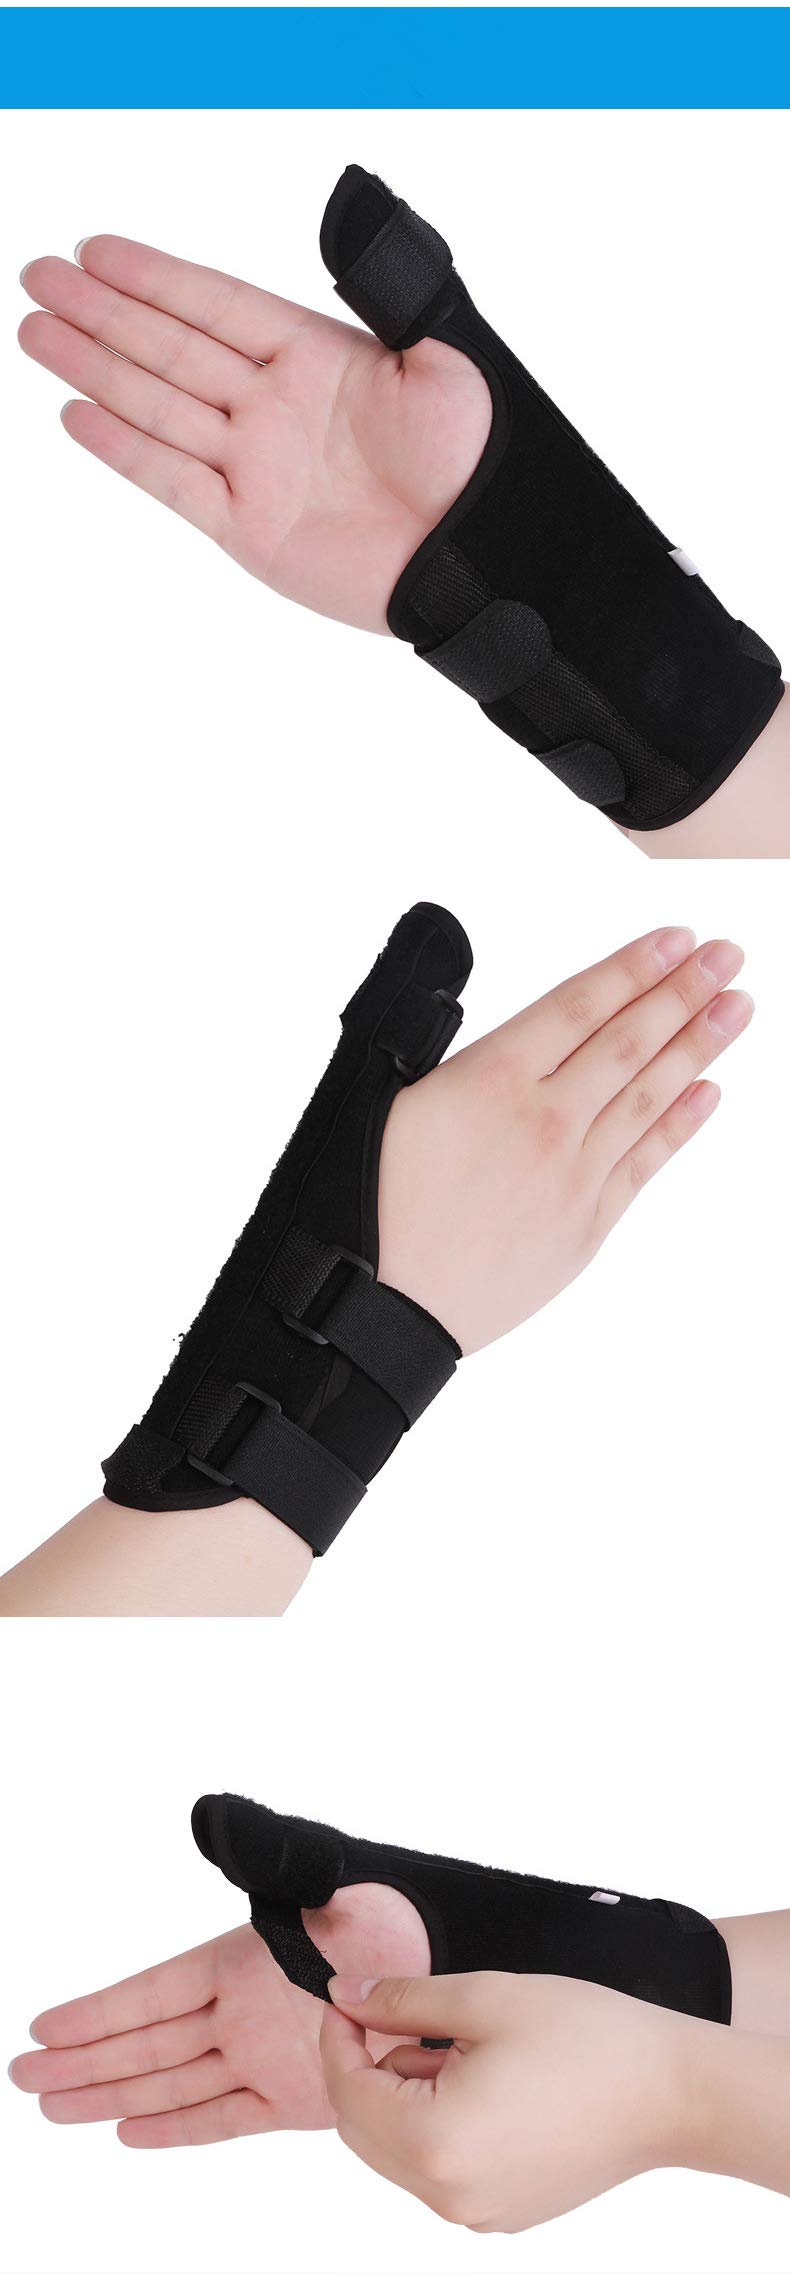 [Australia] - Tpfox Thumb Splint/Thumb Wristband Suitable for Thumb Brace for Arthritis or Soft Tissue Injuries (Medium Left Hand) Medium Left Hand 